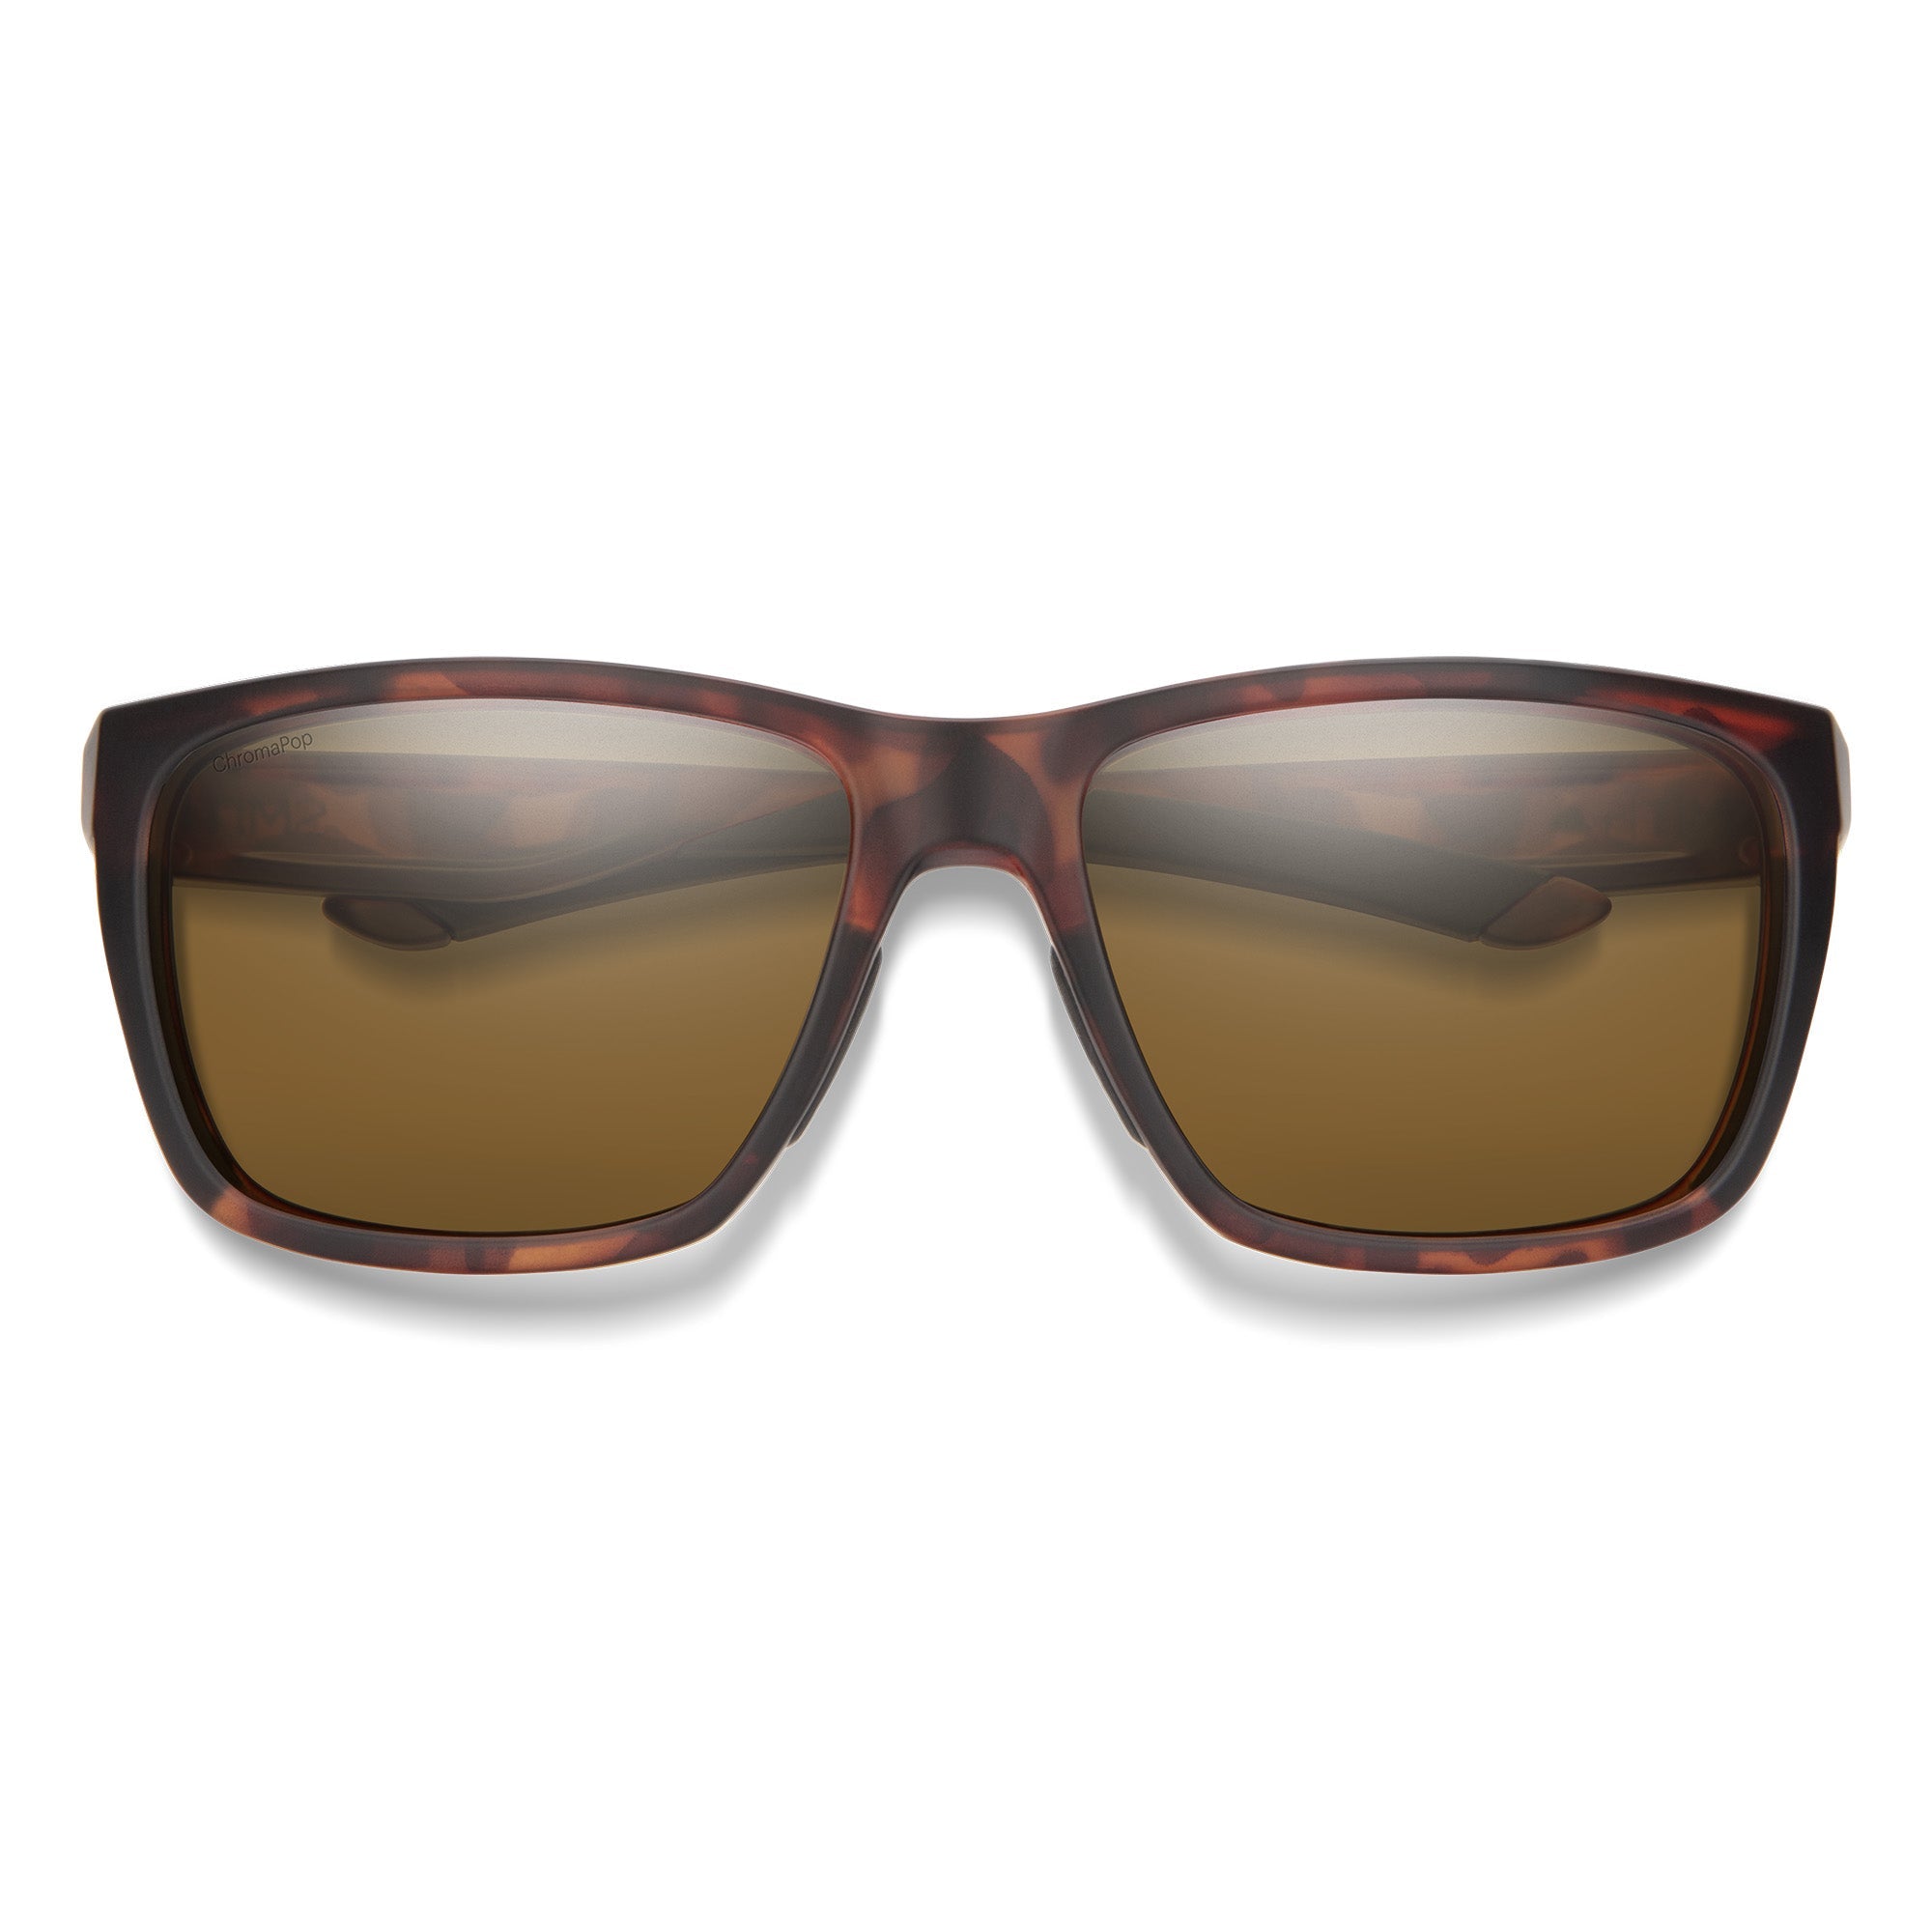 Smith Longfin Sunglasses - Tortoise / ChromaPop Glass Polarized Green Mirror